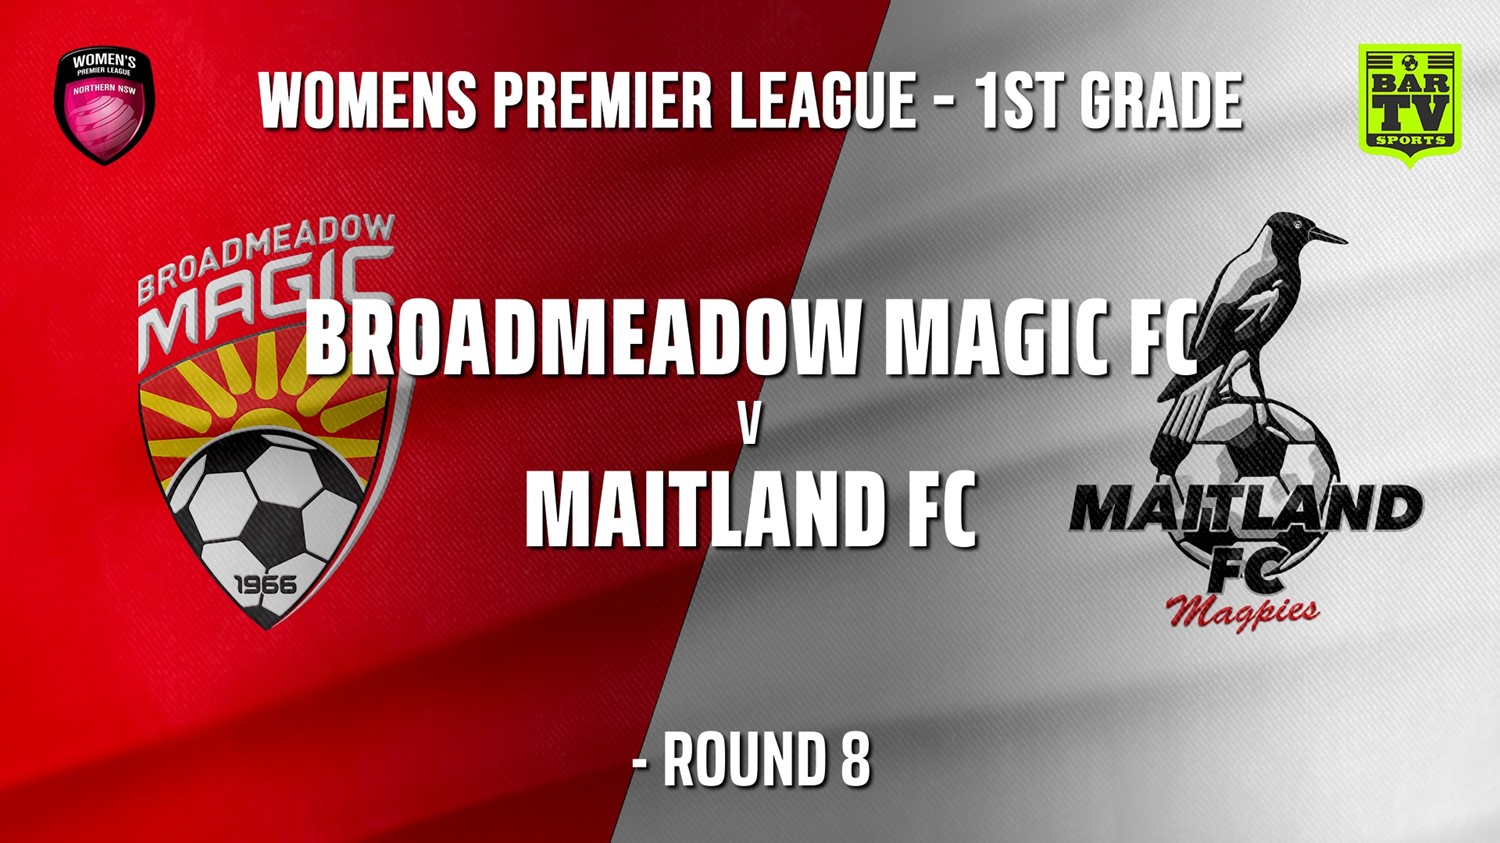 210521-Herald Women’s Premier League Round 8 - Broadmeadow Magic FC (women) v Maitland FC (women) Minigame Slate Image